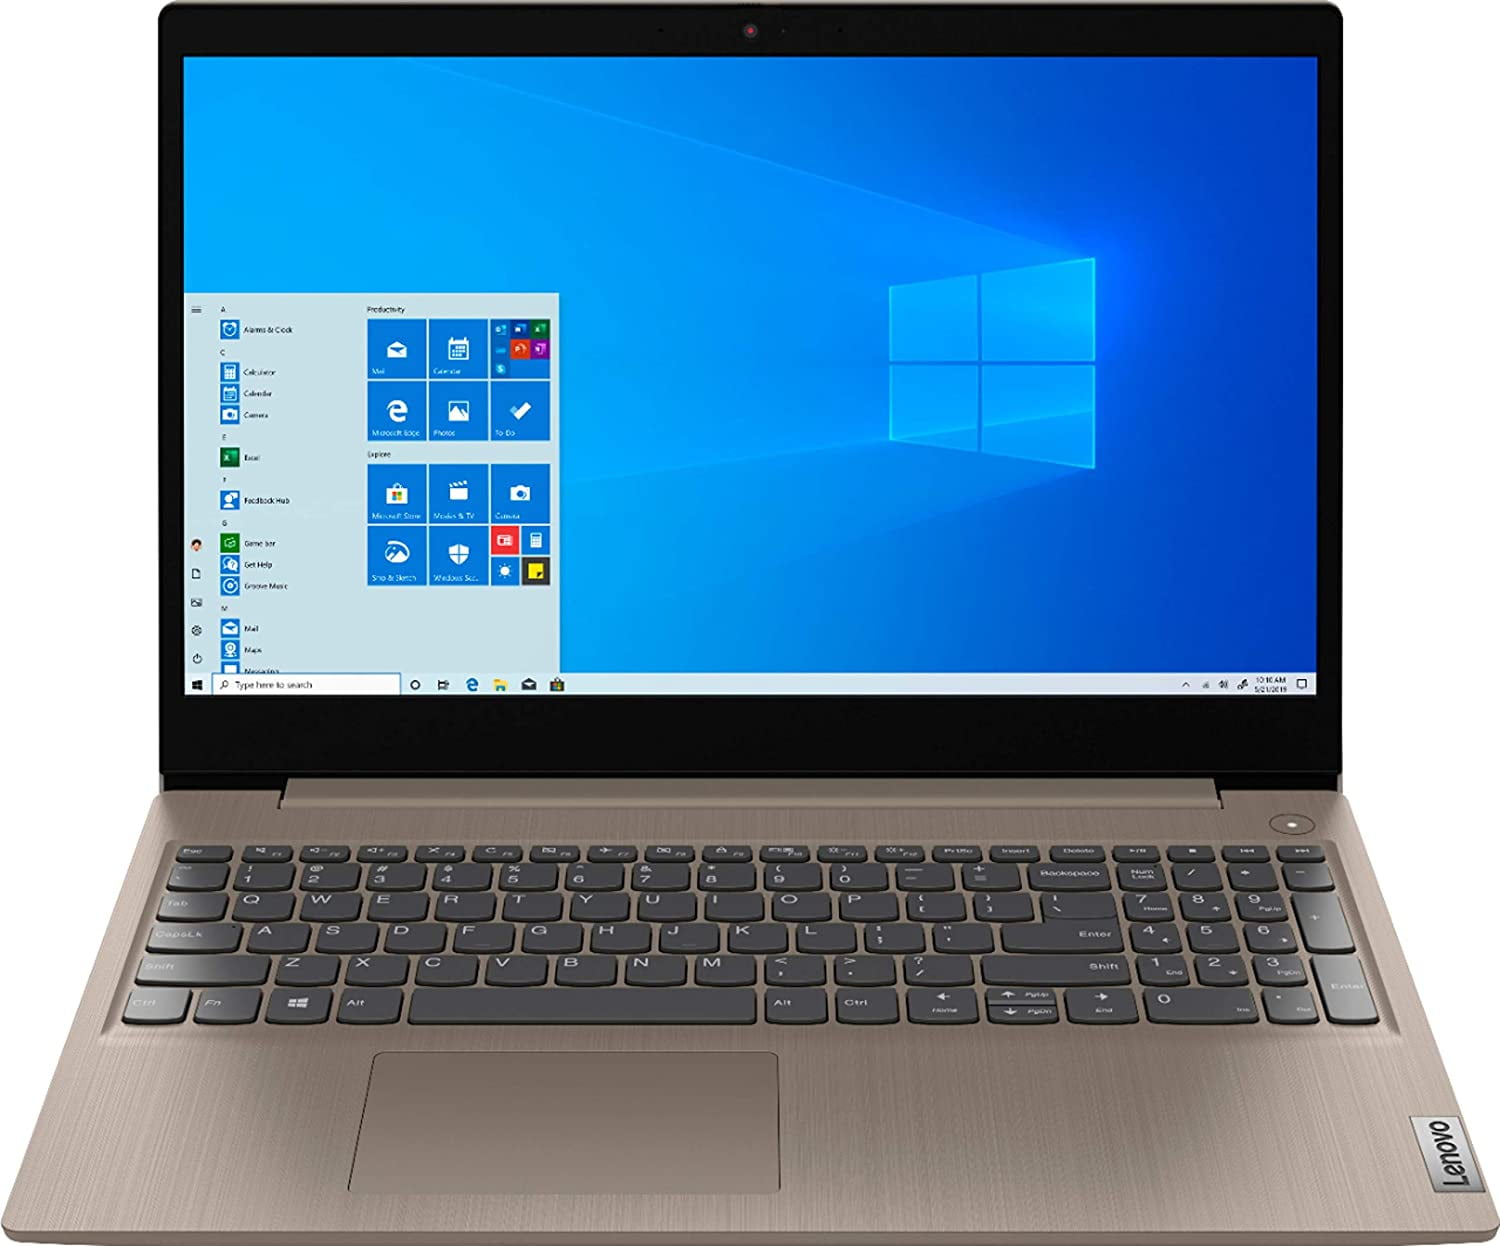 2020 Newest 3 15" HD Touch Screen Laptop, Intel 10th Gen Dual-Core i3-1005G1 CPU, 8GB RAM, 256GB PCI-e SSD, Webcam, WiFi 5, Bluetooth, Windows 10 S - Almond - Walmart.com